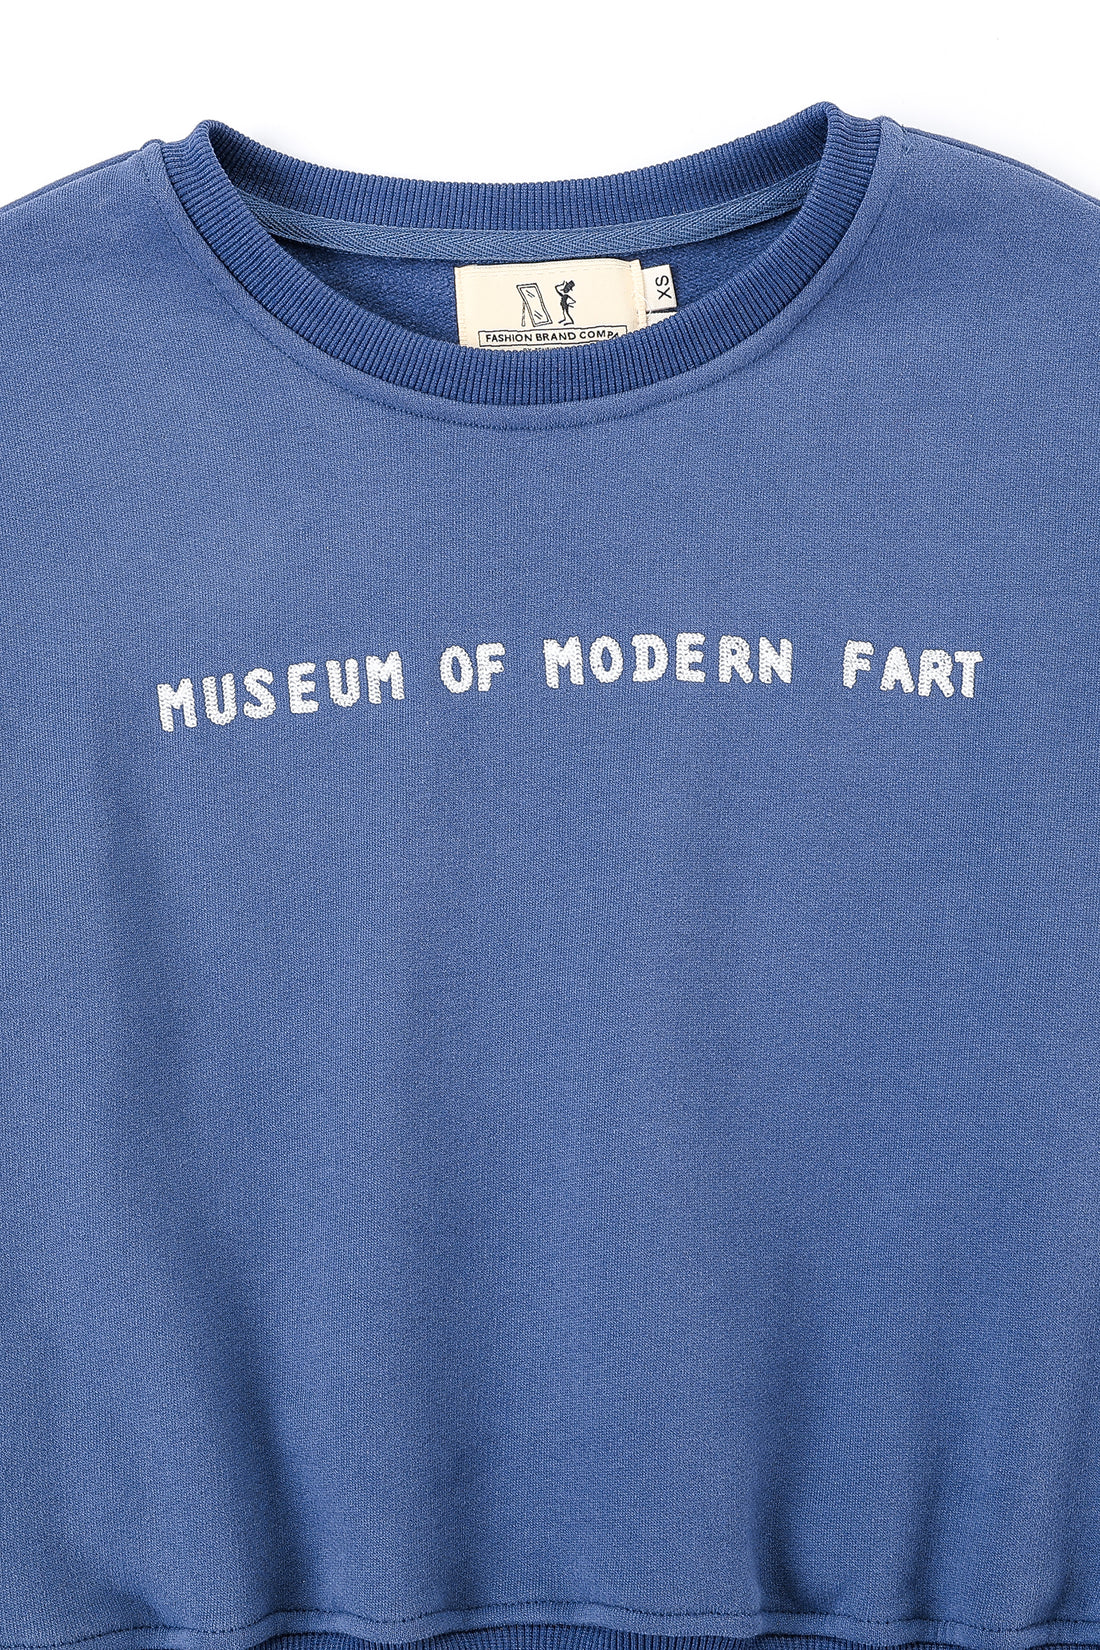 Museum of Modern Fart Sweatshirt